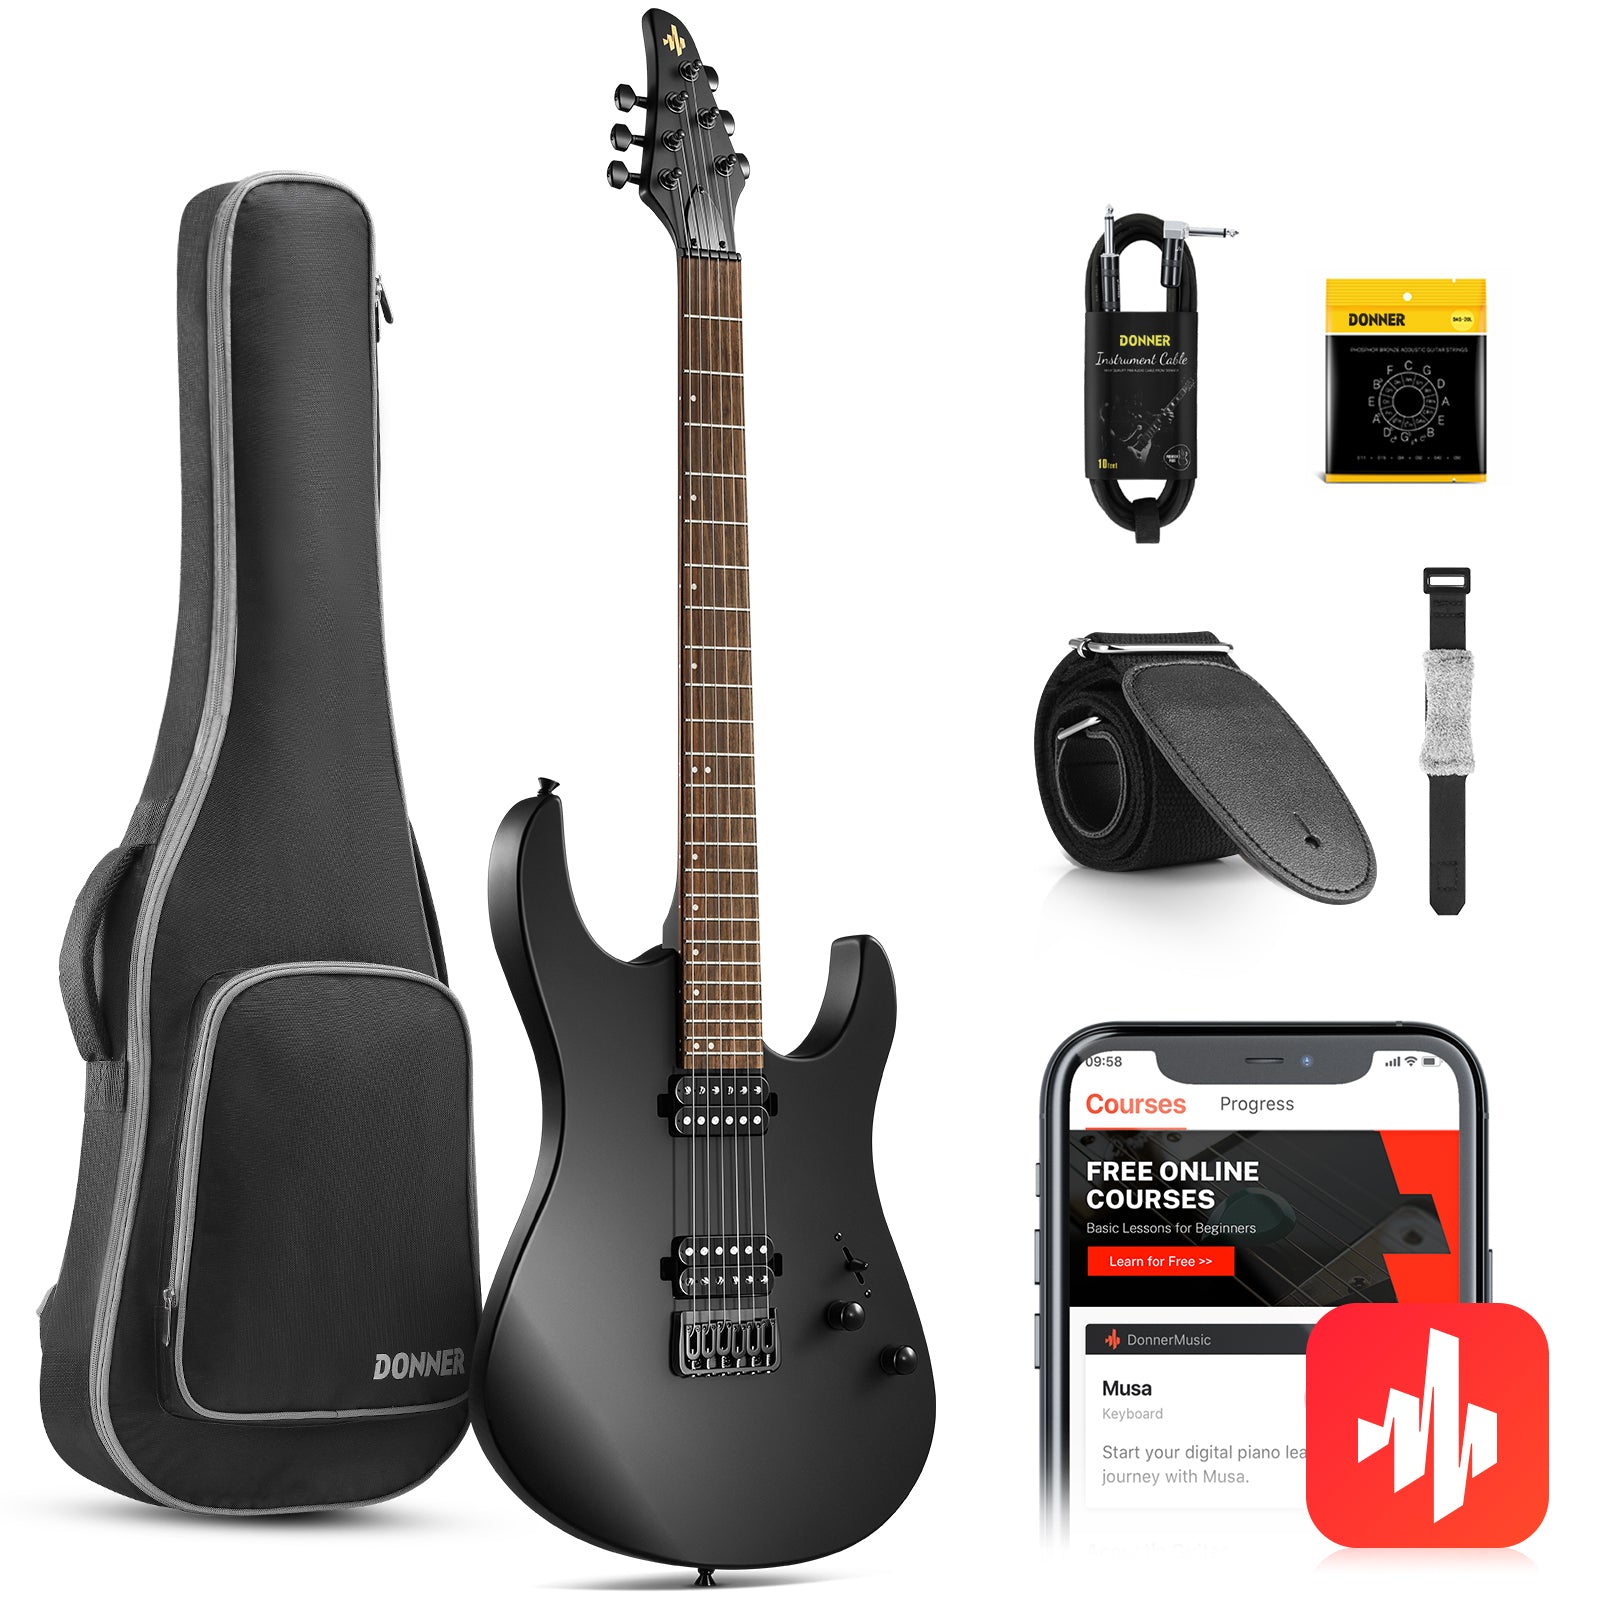 

Donner DMT-100 39" Matt Metal Electric Guitar Kit Solid Body with H-H Pickups Black